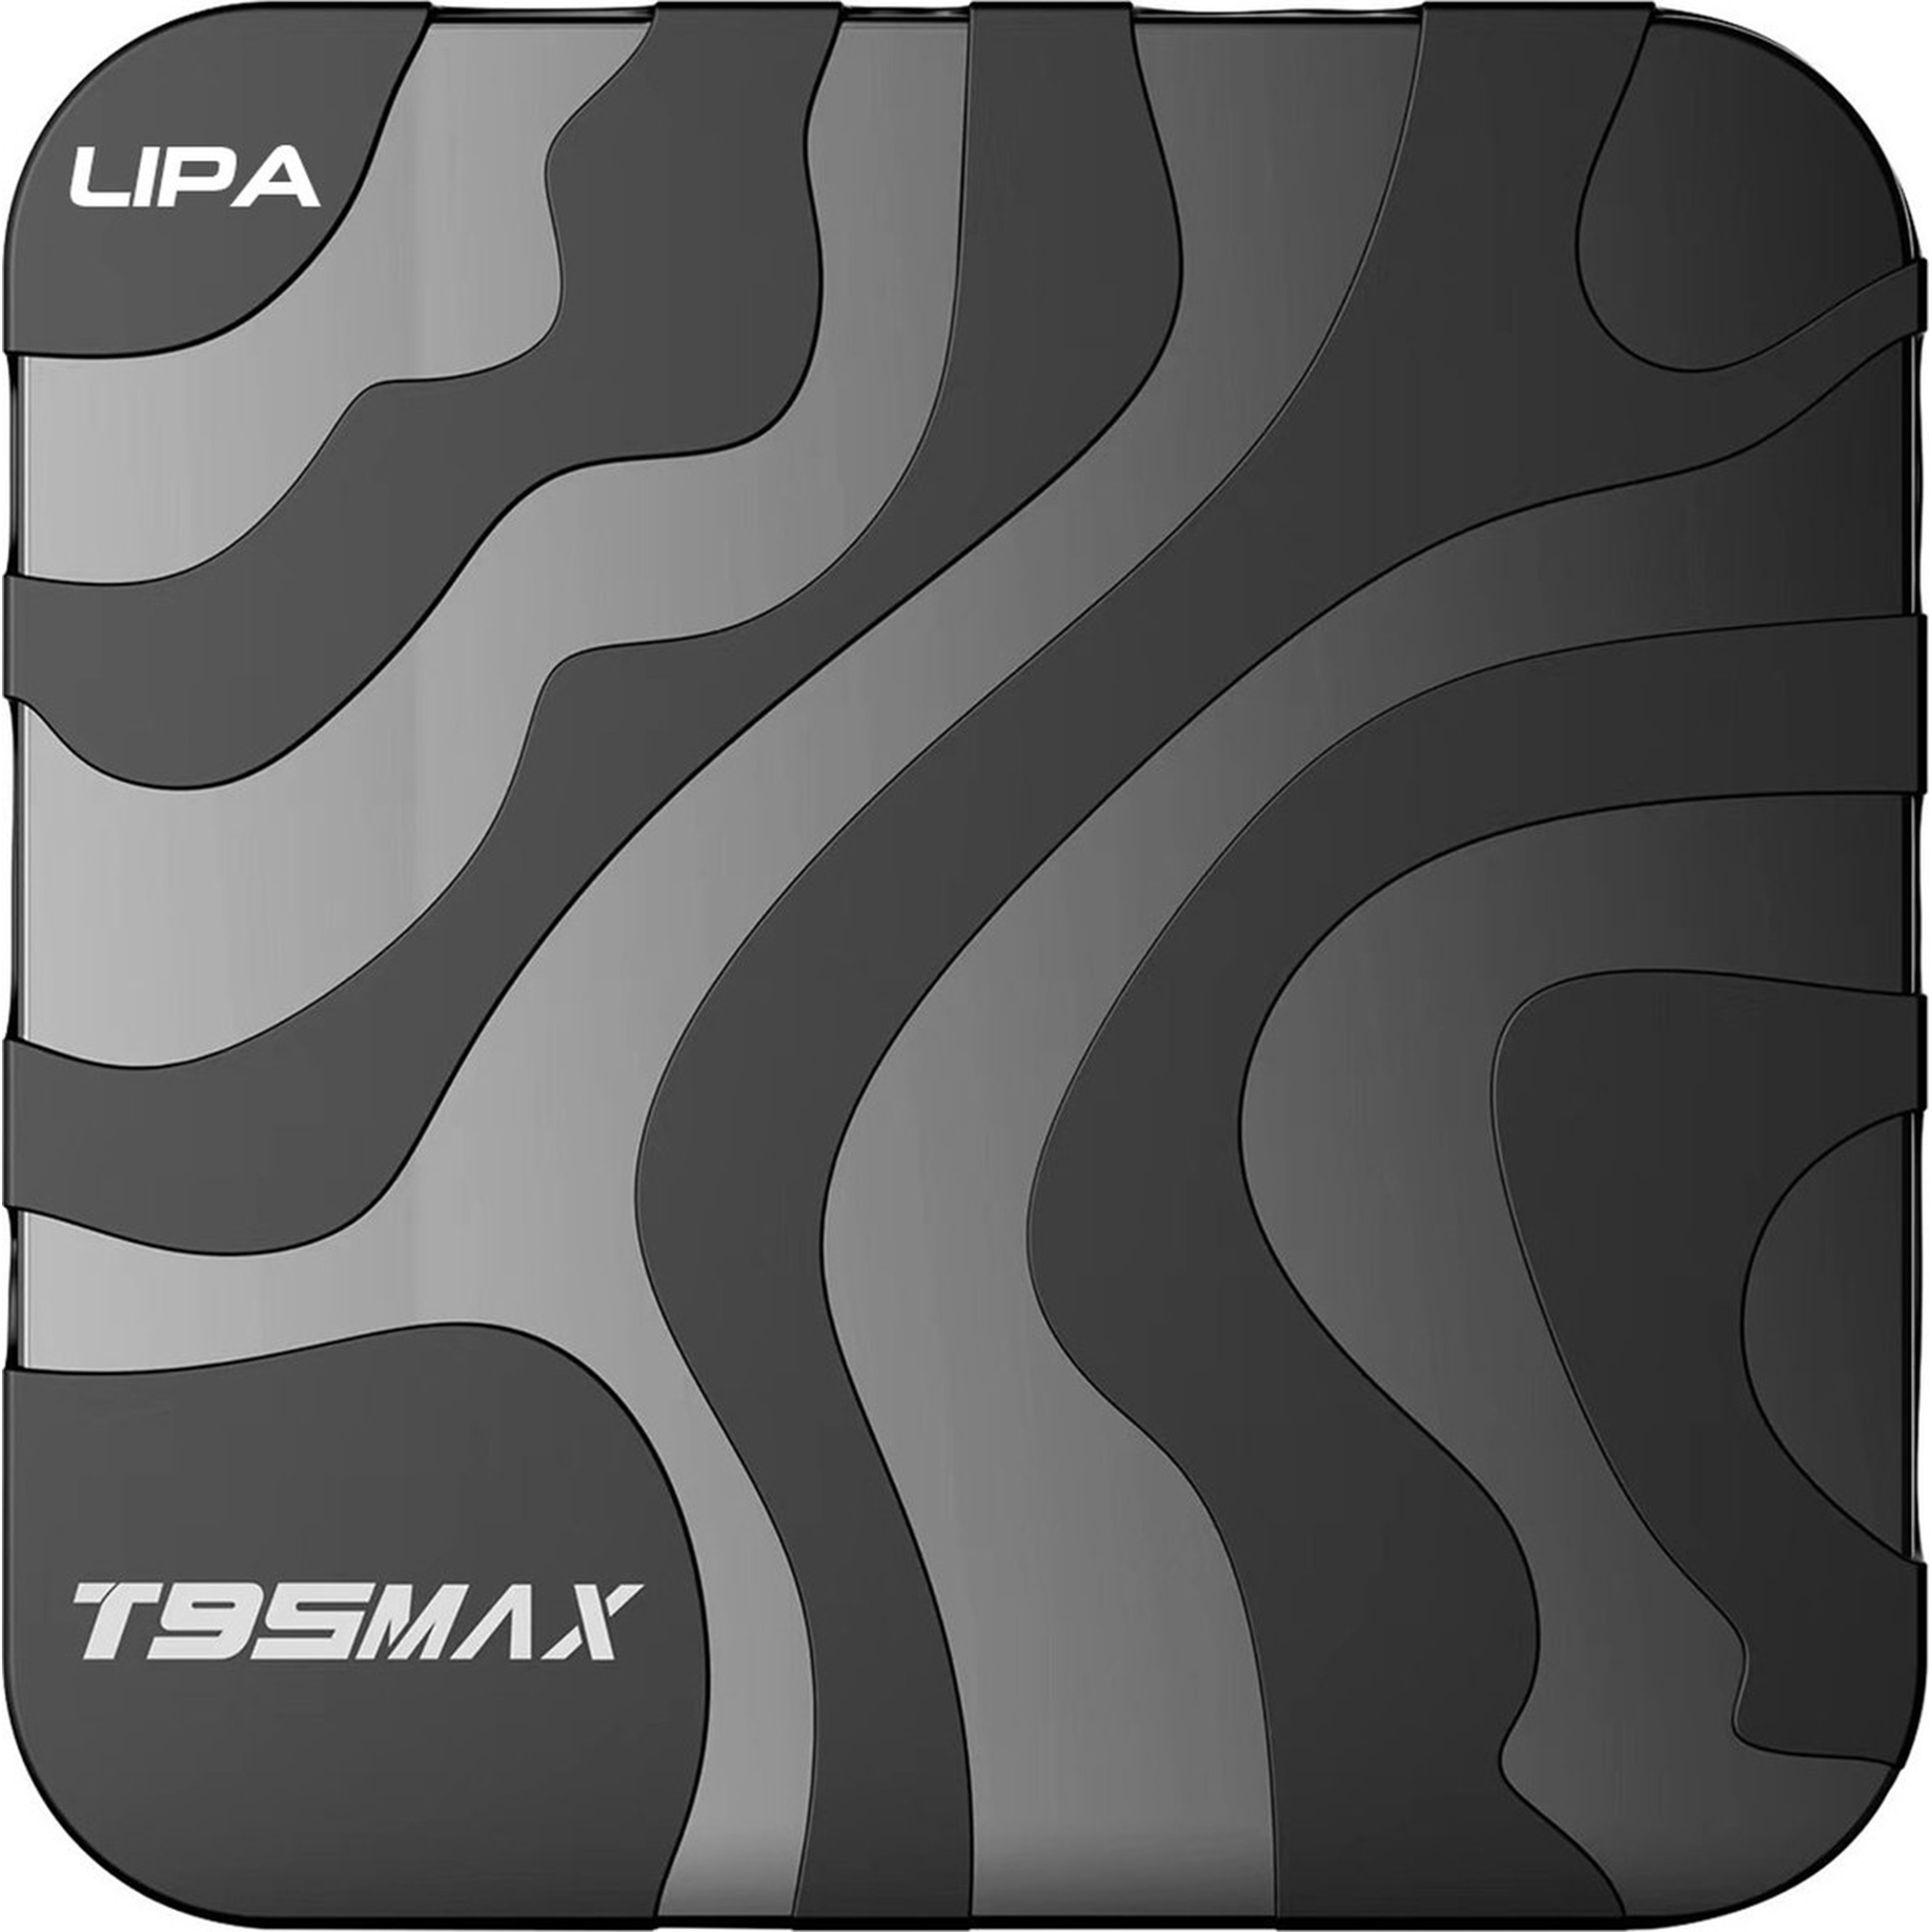 Black 64 Android Multimedia tv GB box Max T95 LIPA player,